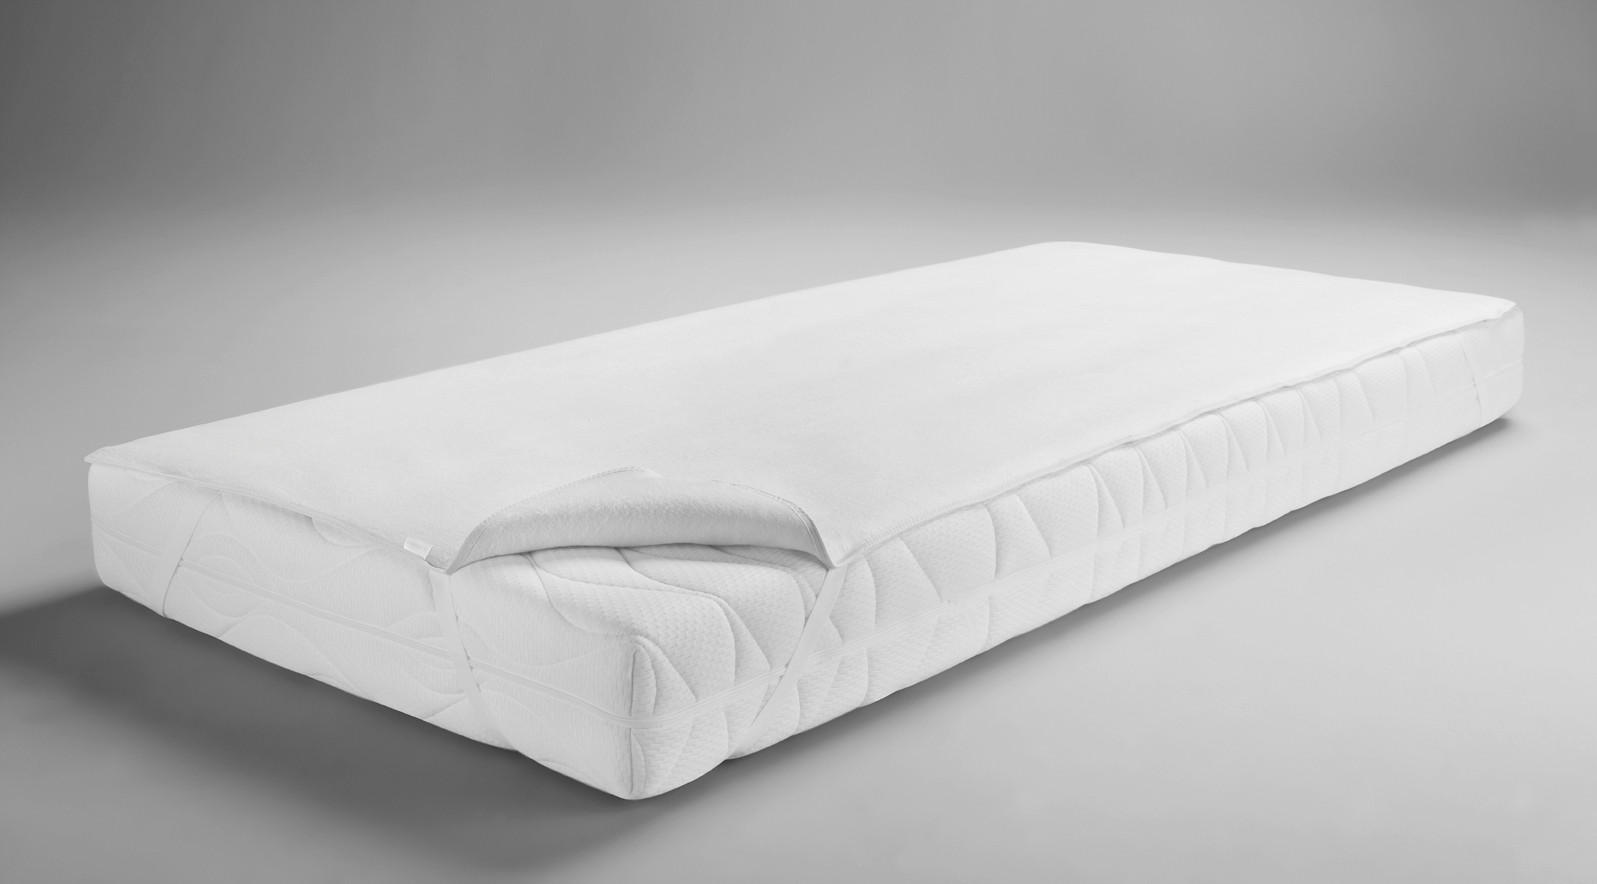 OCHRANNÝ POVLAK NA MATRACI, 160/200 cm - bílá, Basics, textil (160/200cm) - Sleeptex